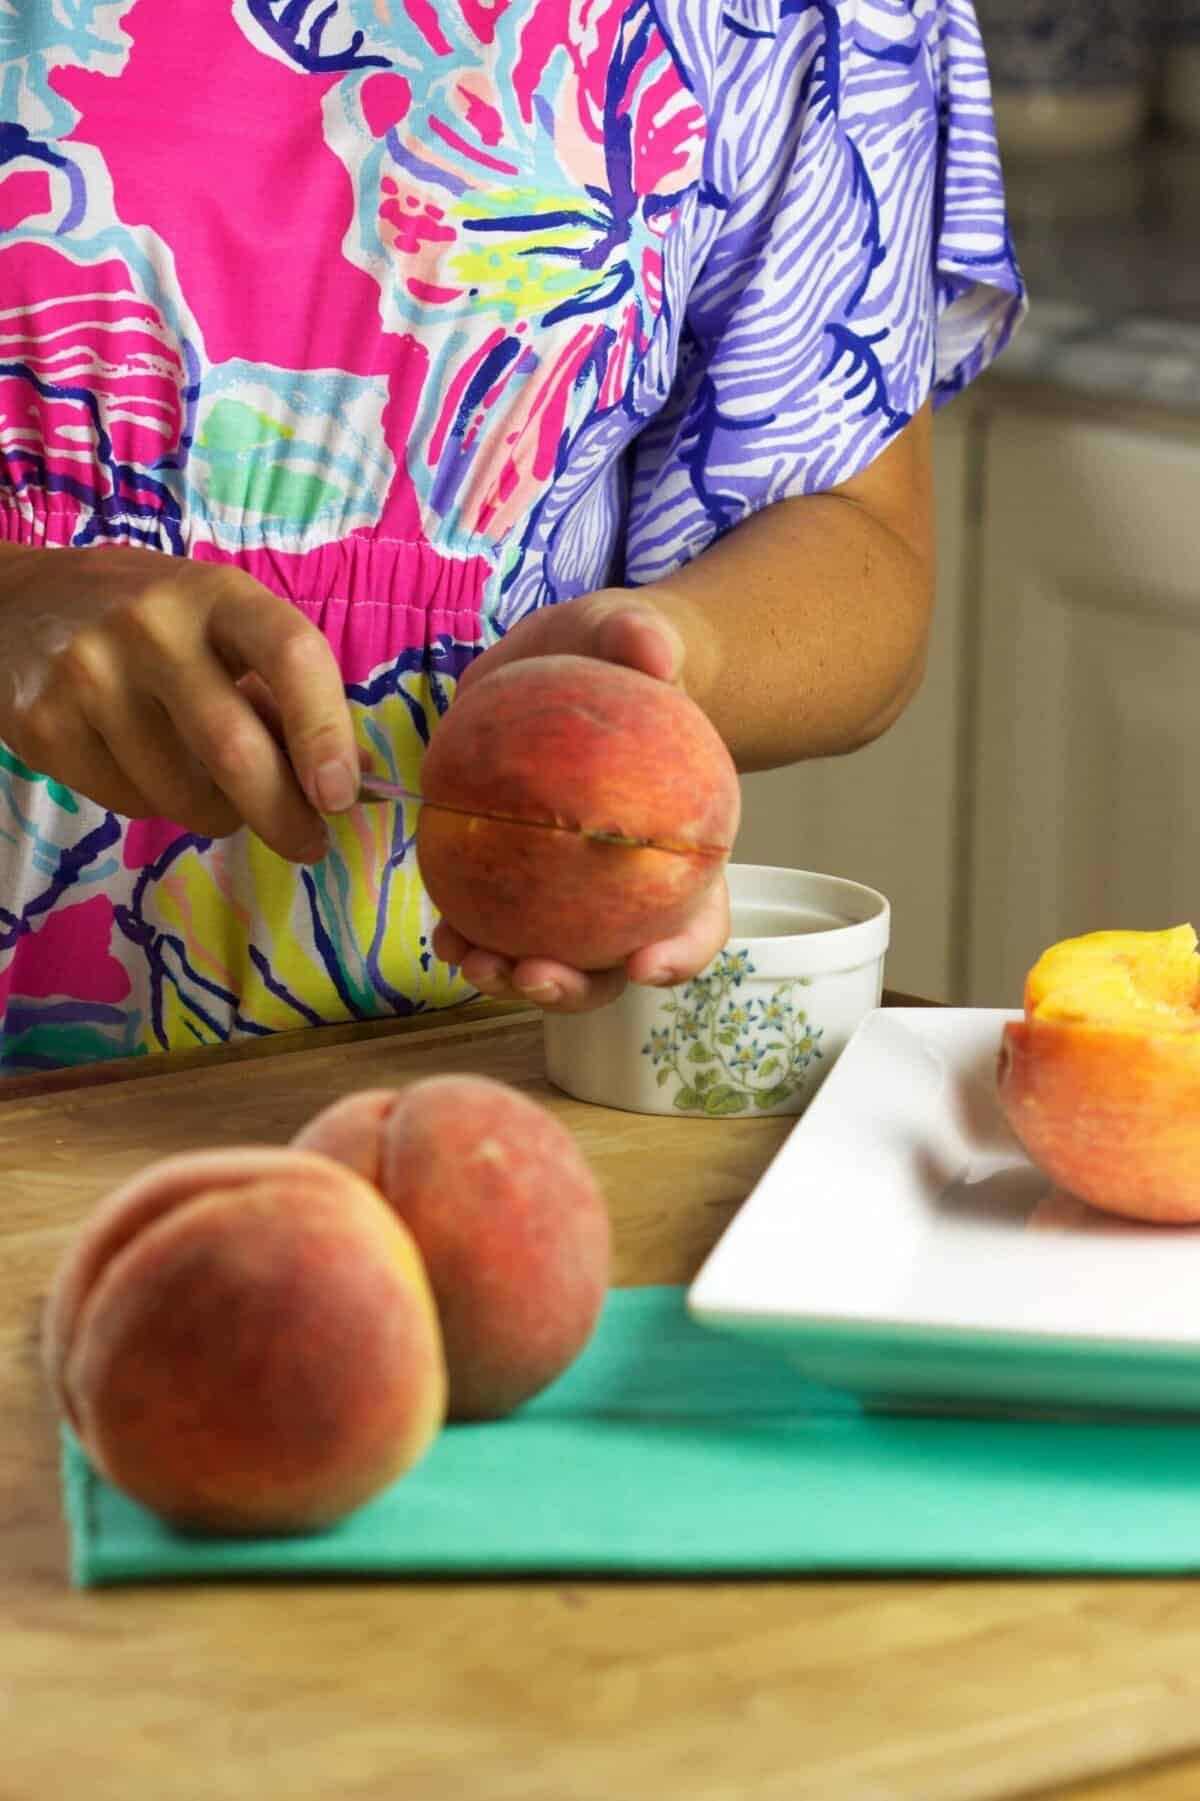 Woman cutting a fresh peach in half.